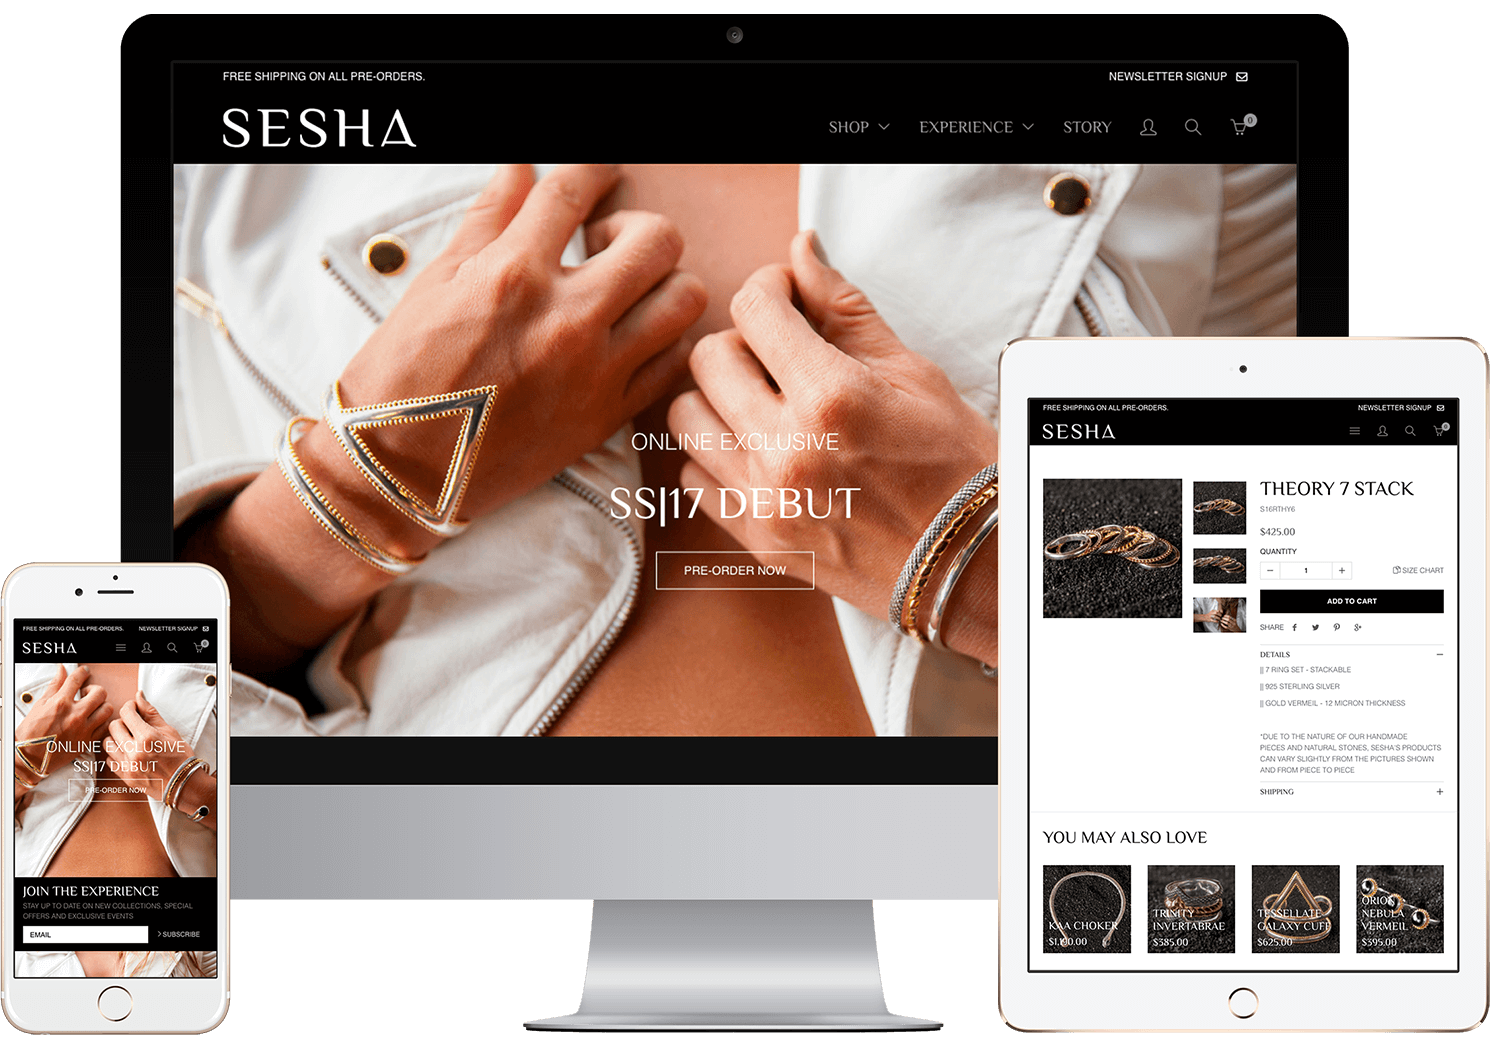 Sesha Overview